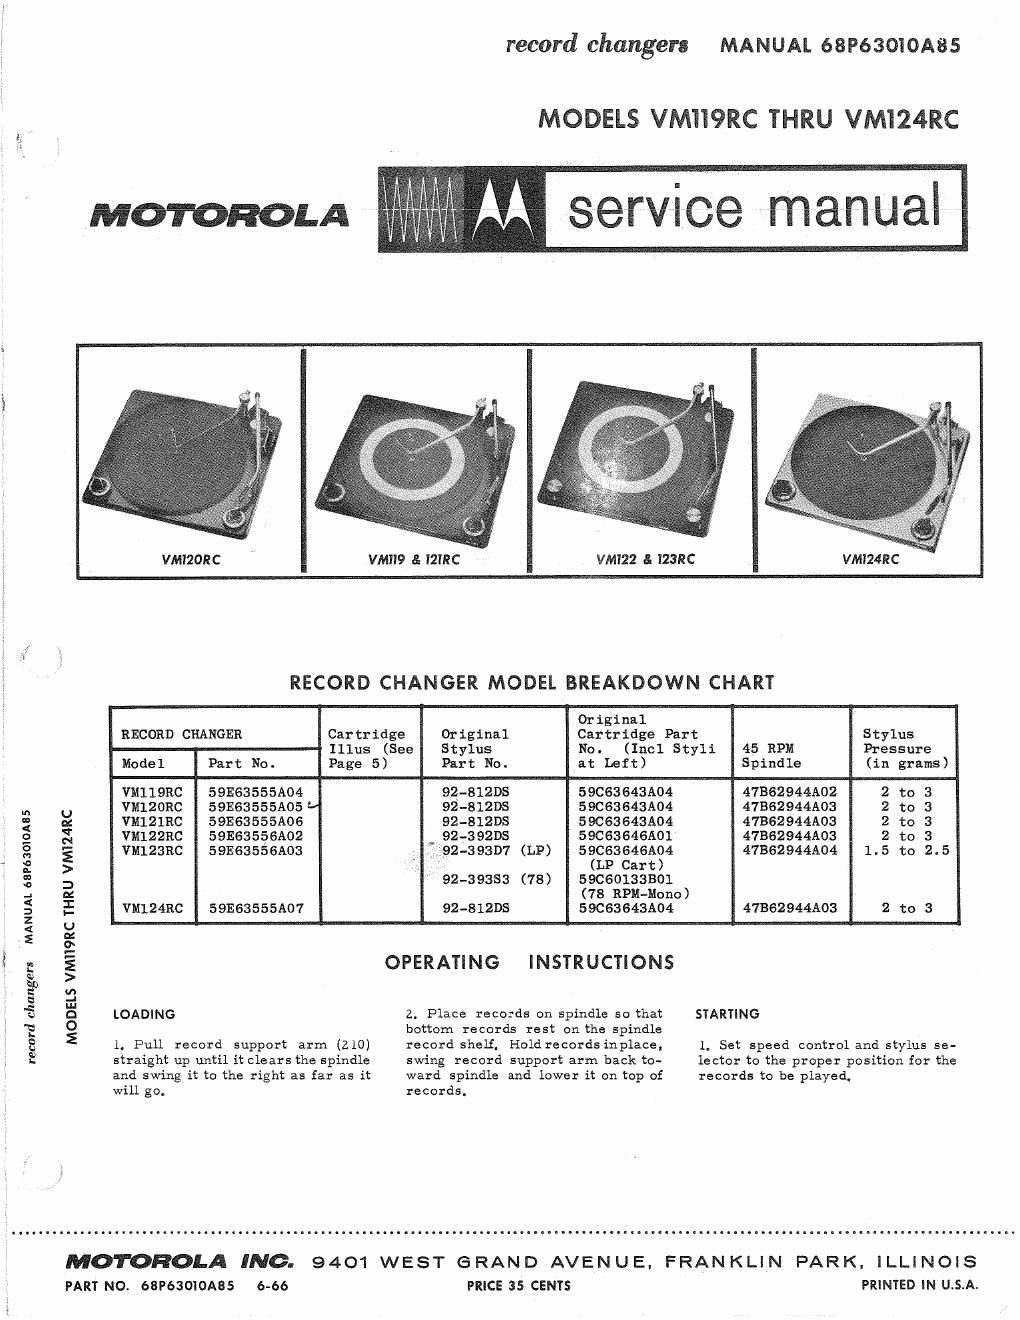 motorola vm 121 rc service manual